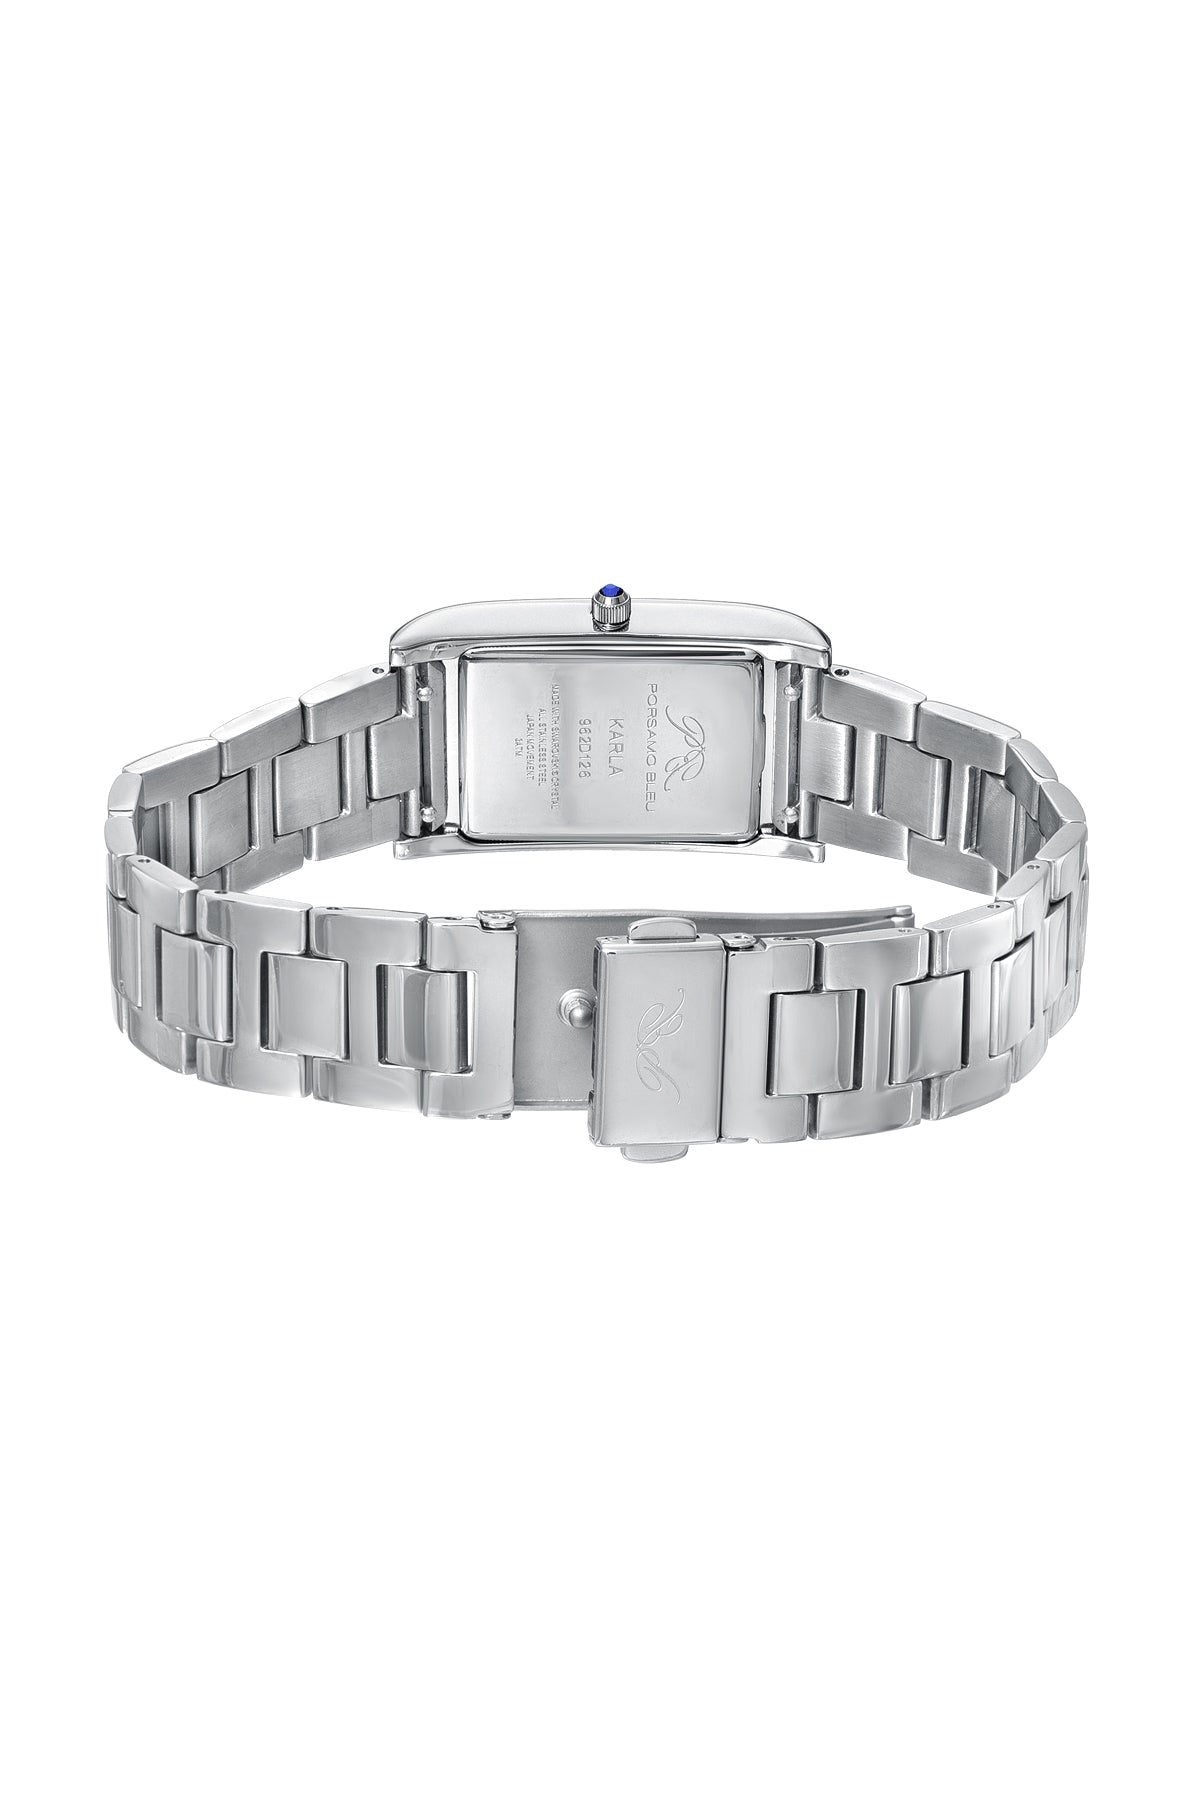 Porsamo Bleu Karla Luxury Womens Stainless Steel Watch Interchangeable Bands, Silver, Green 962DKAS